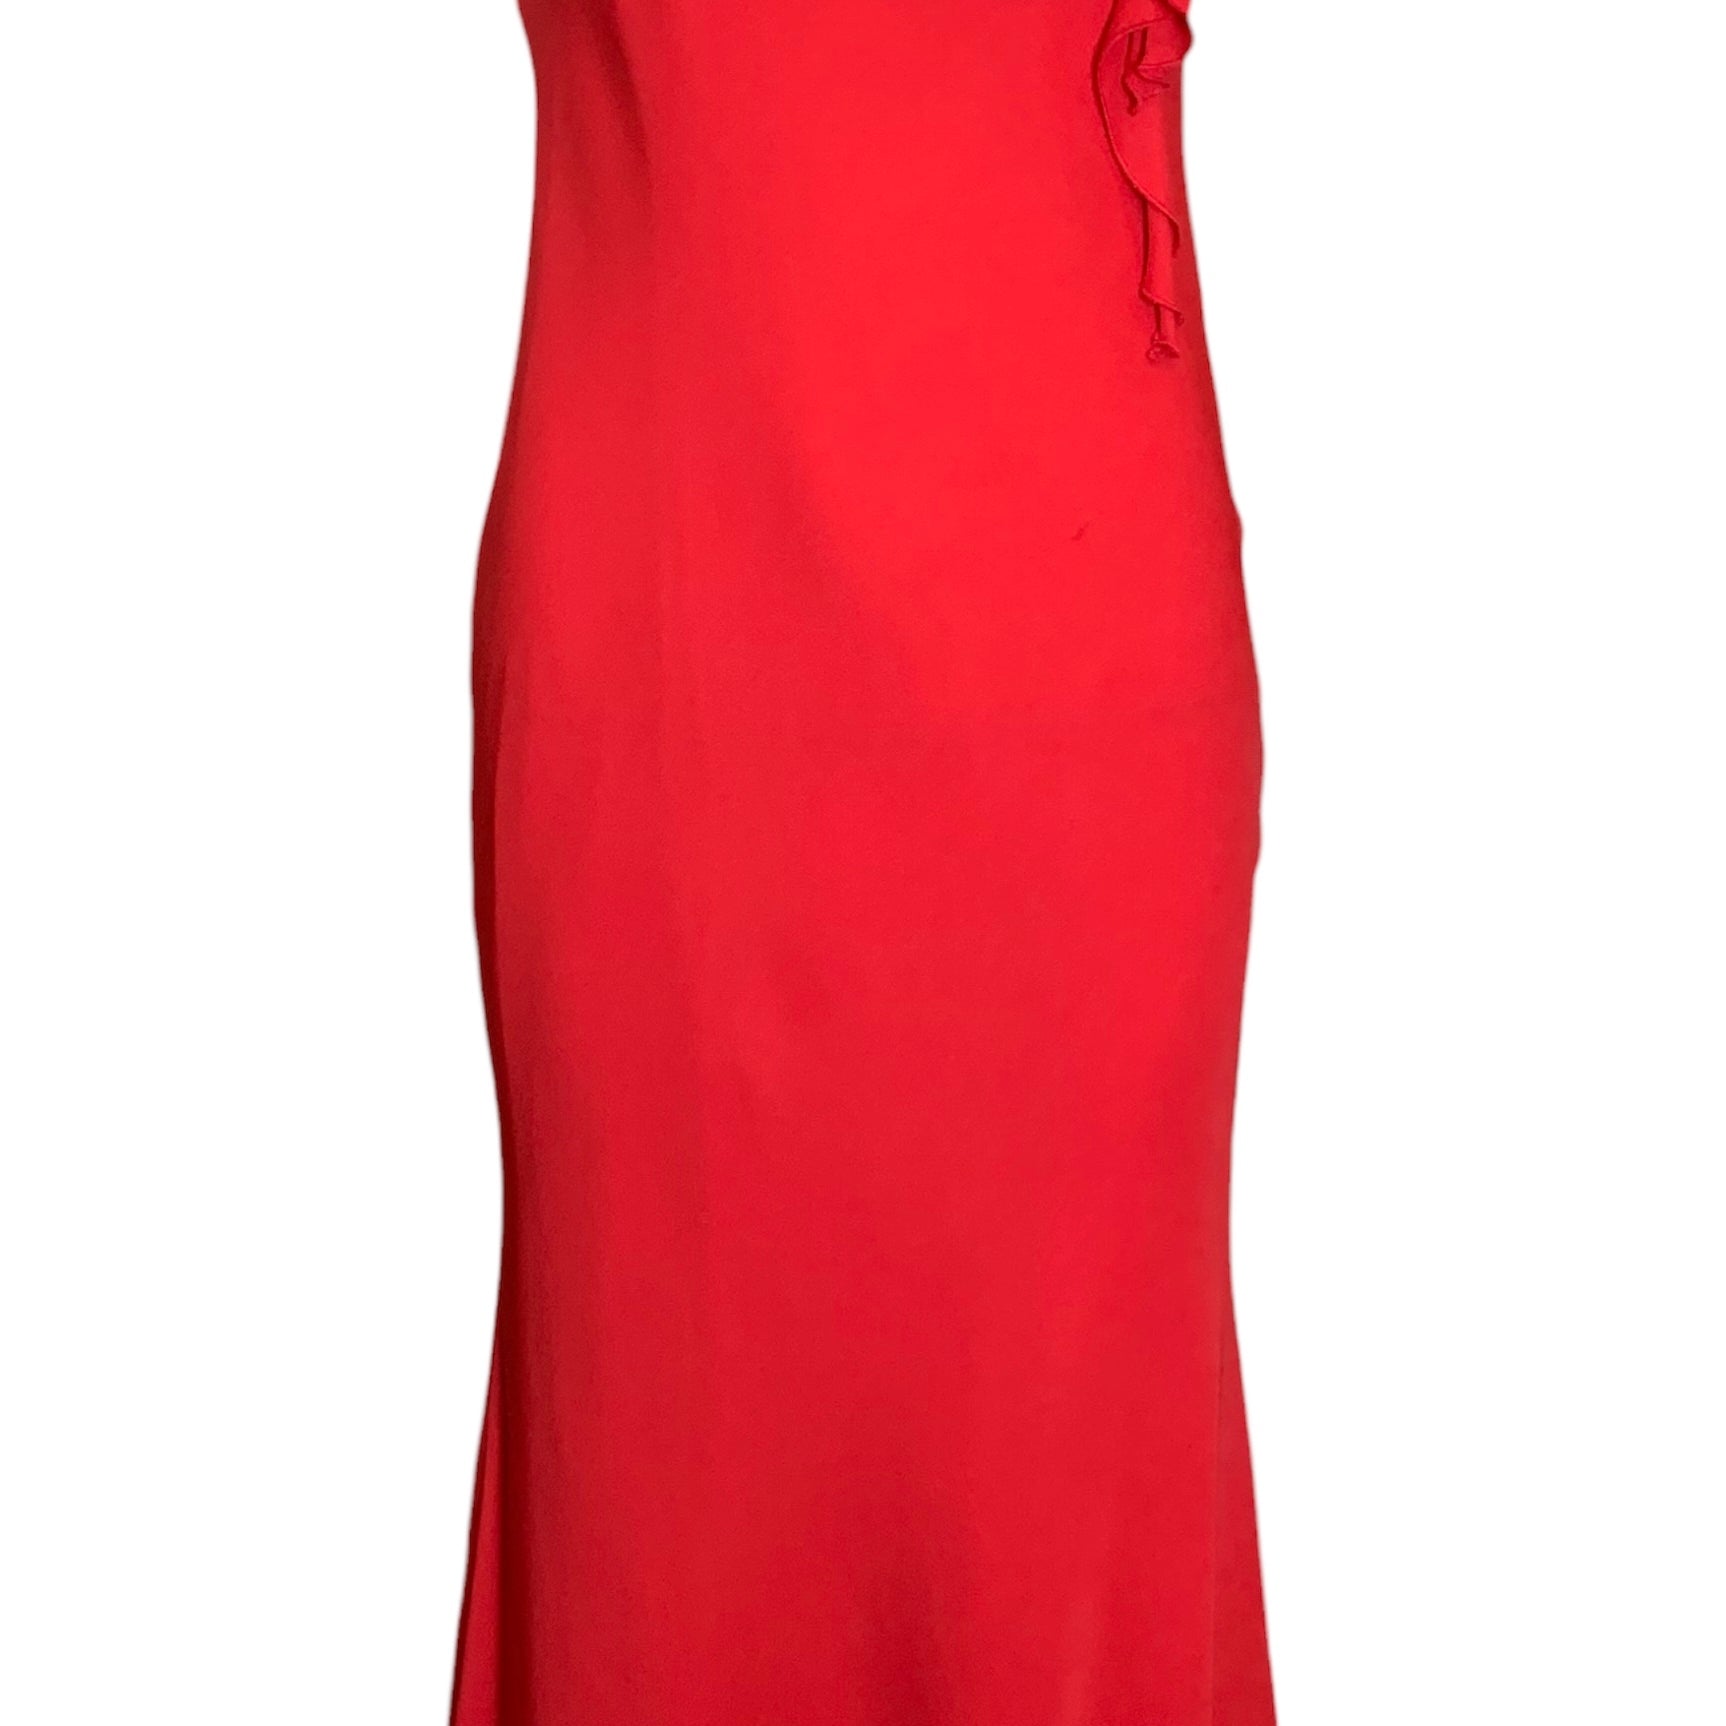 Mila Schön Cherry Red Asymmetrical Ruffled Detail Gown FRONT 1/5